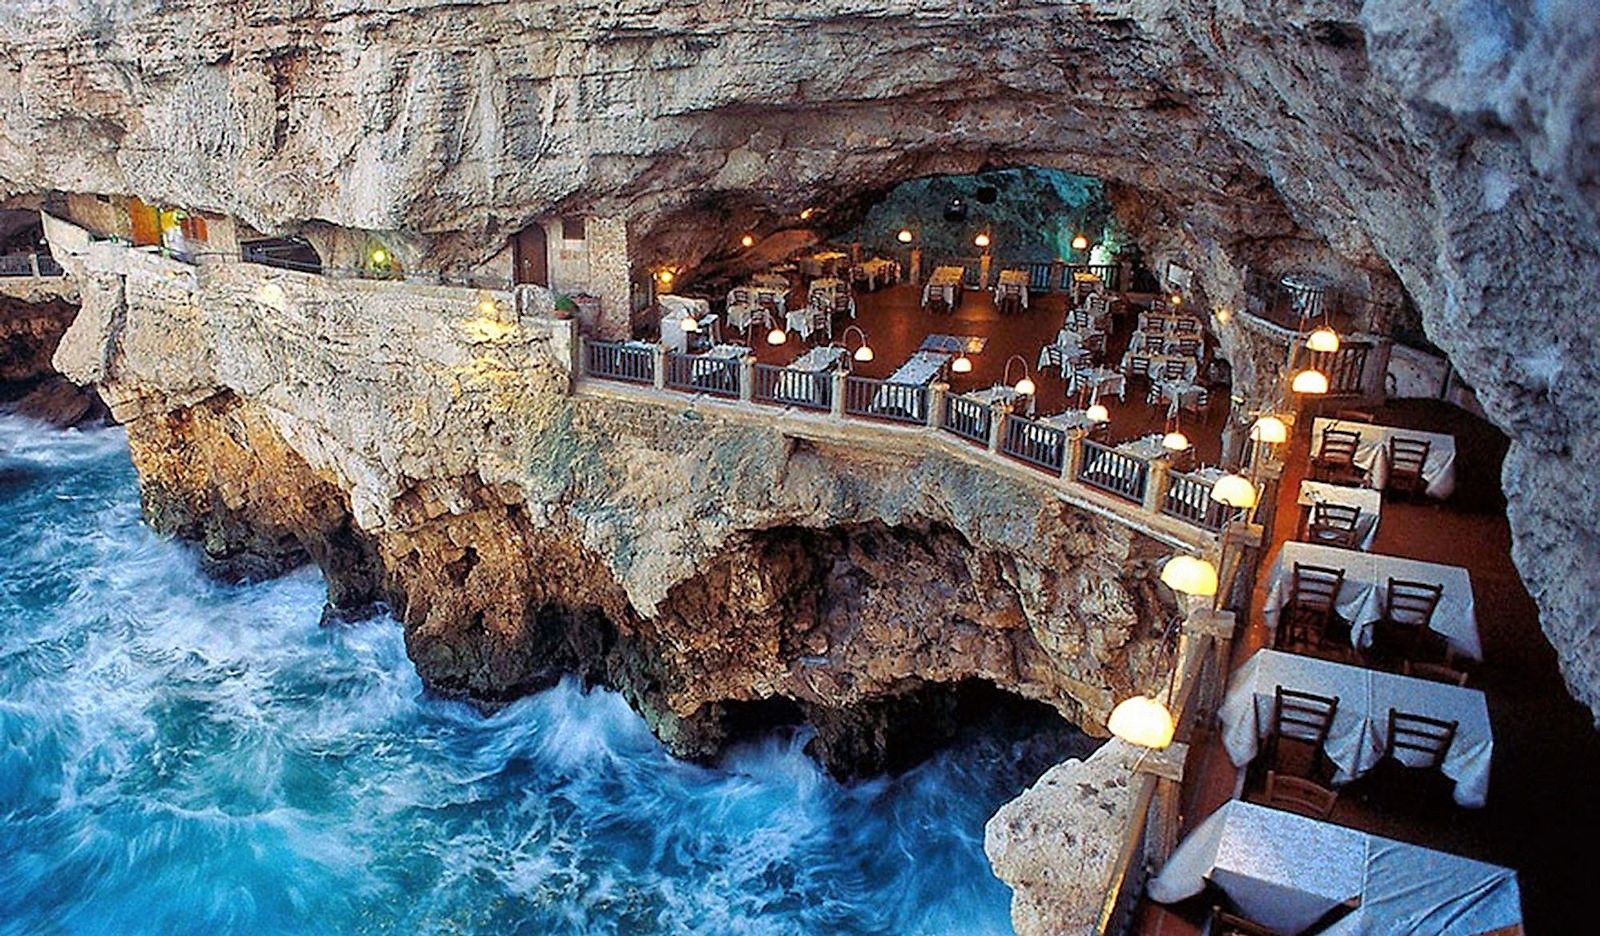 Ristorante Grotta Palazzese, Italy